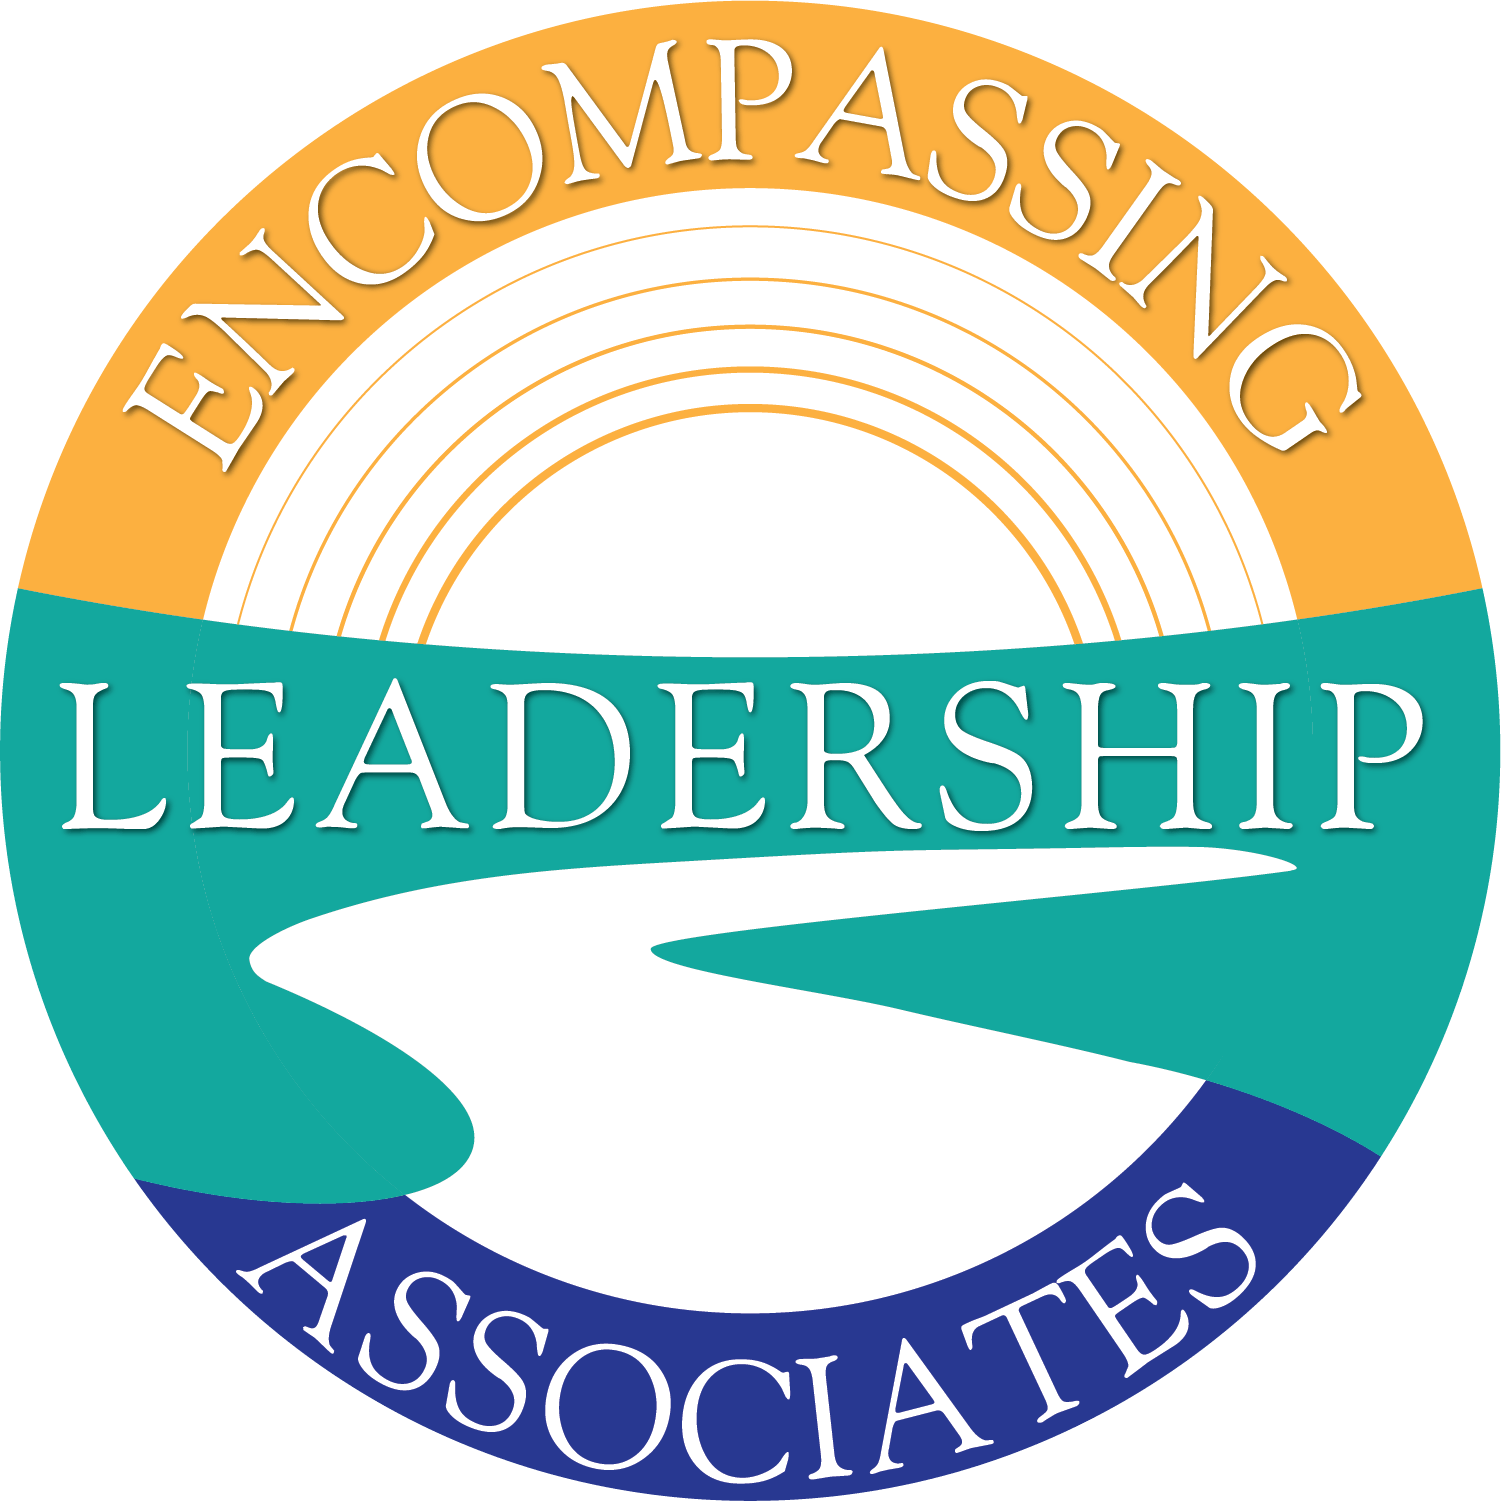 Encompassing Leadership Associates